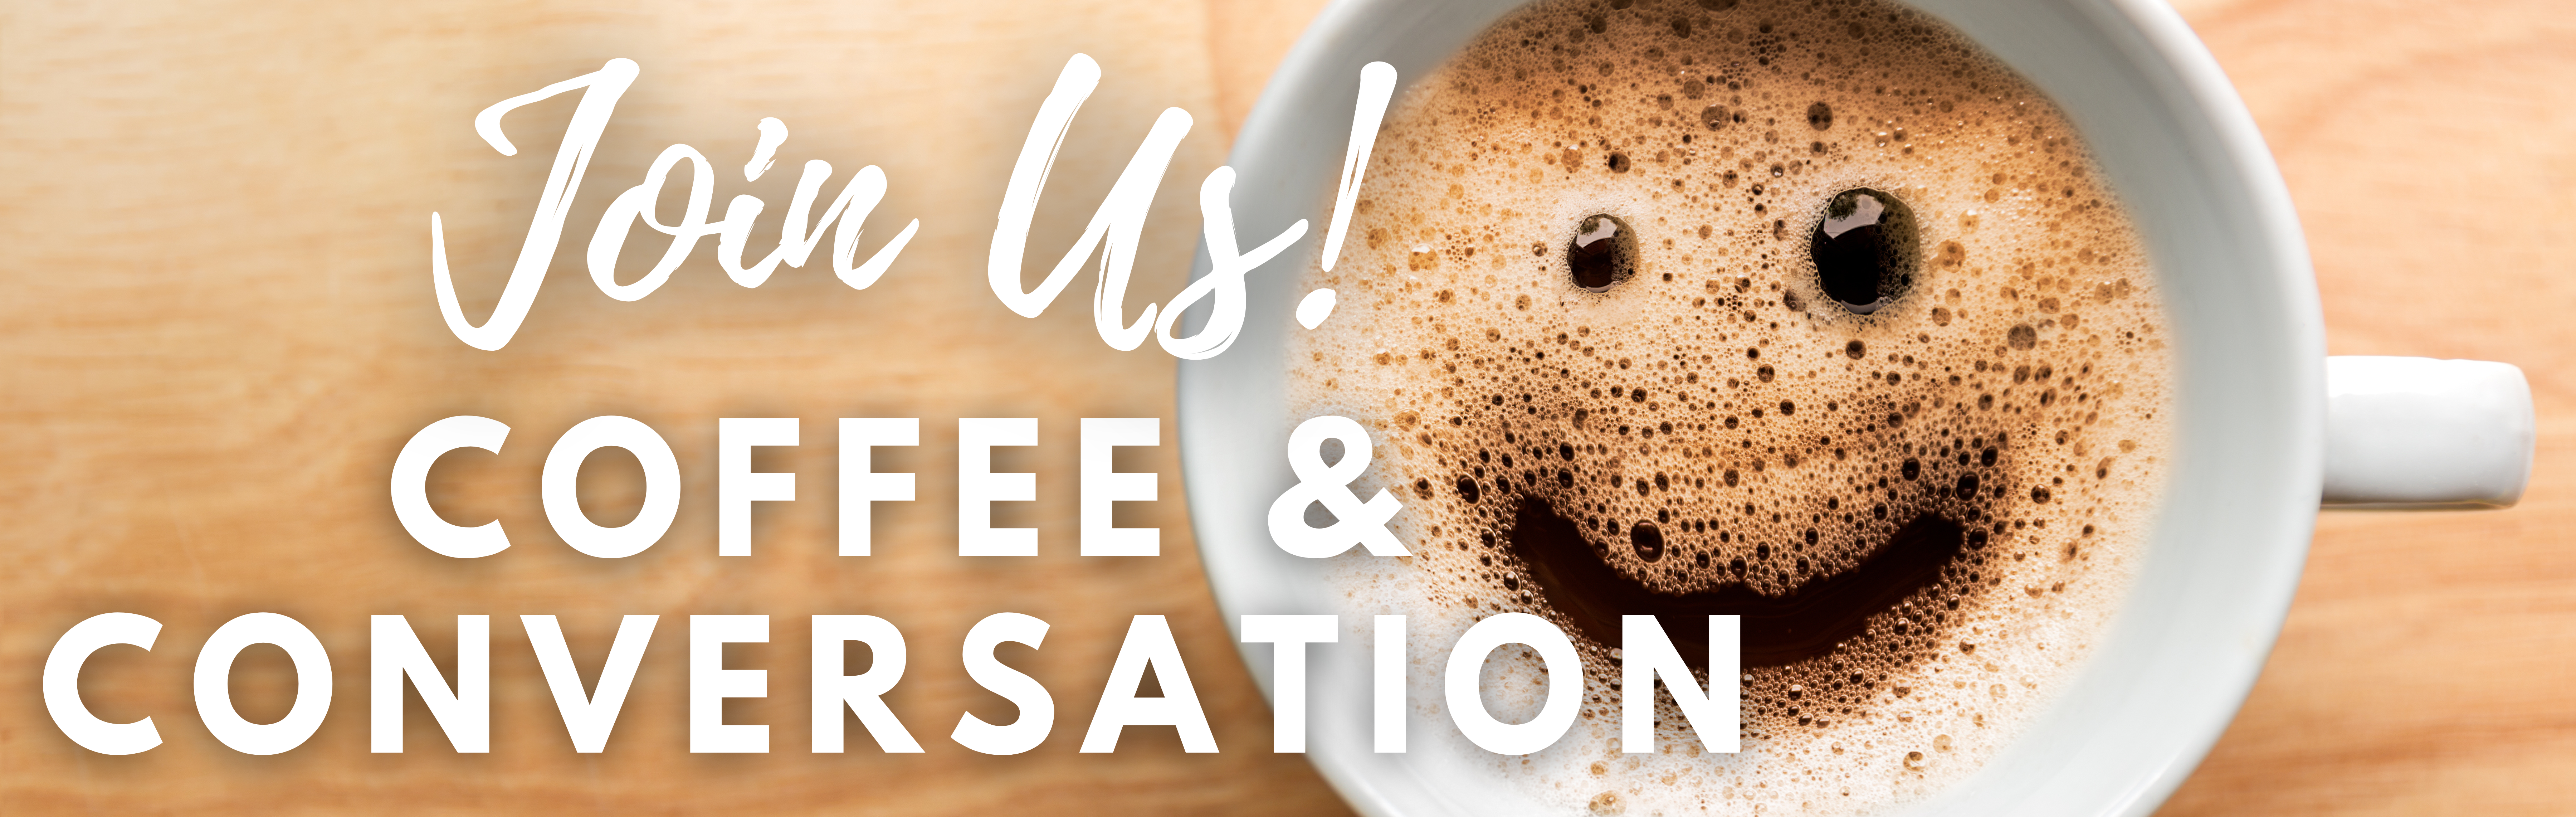 Coffee & Conversation - Coffee w Smile